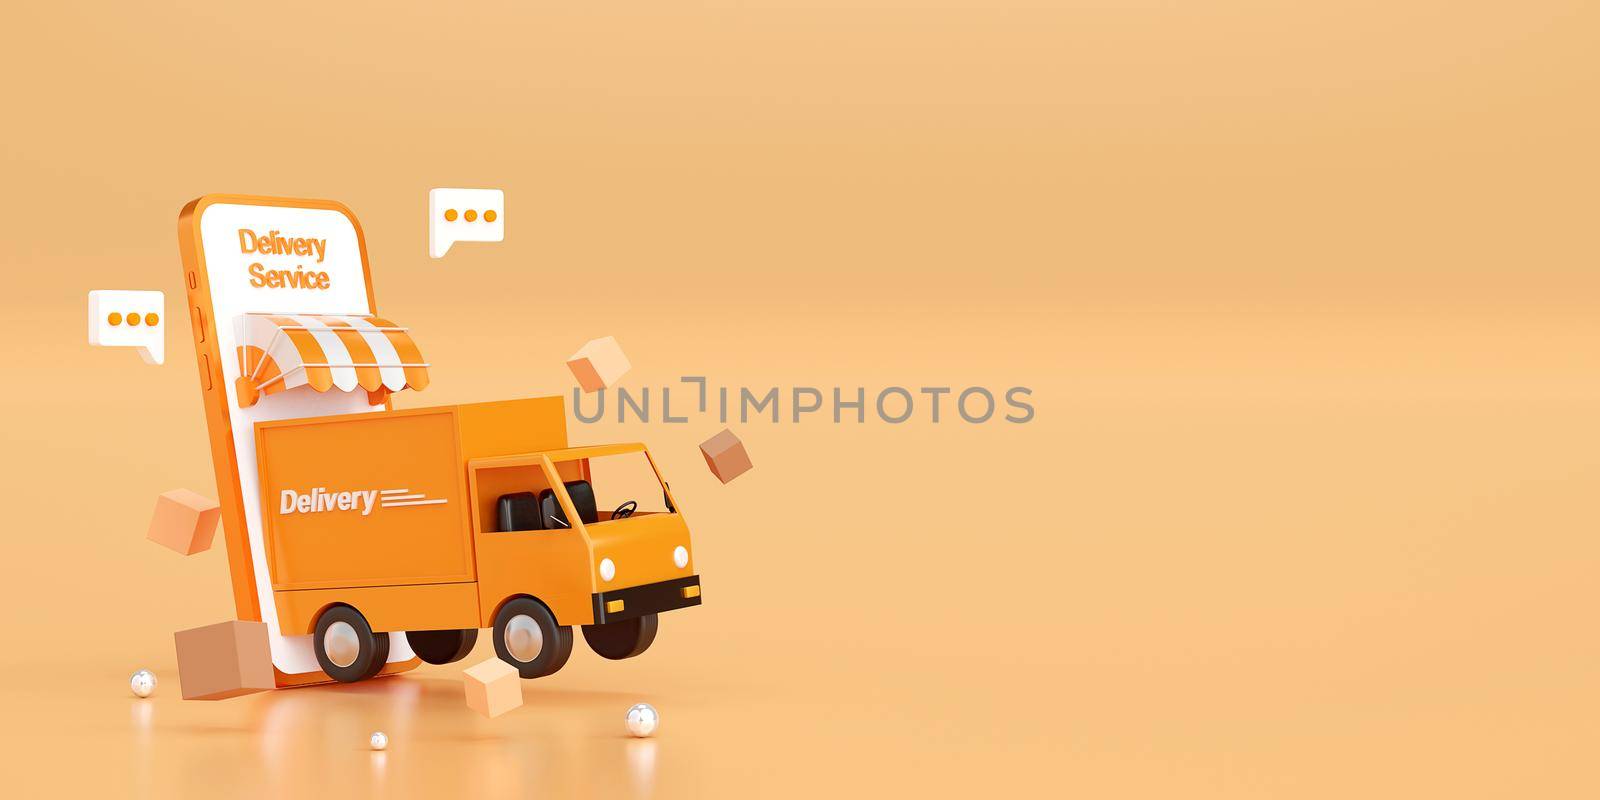 Delivery service on mobile application, Transportation delivery by truck, 3d illustration by nutzchotwarut